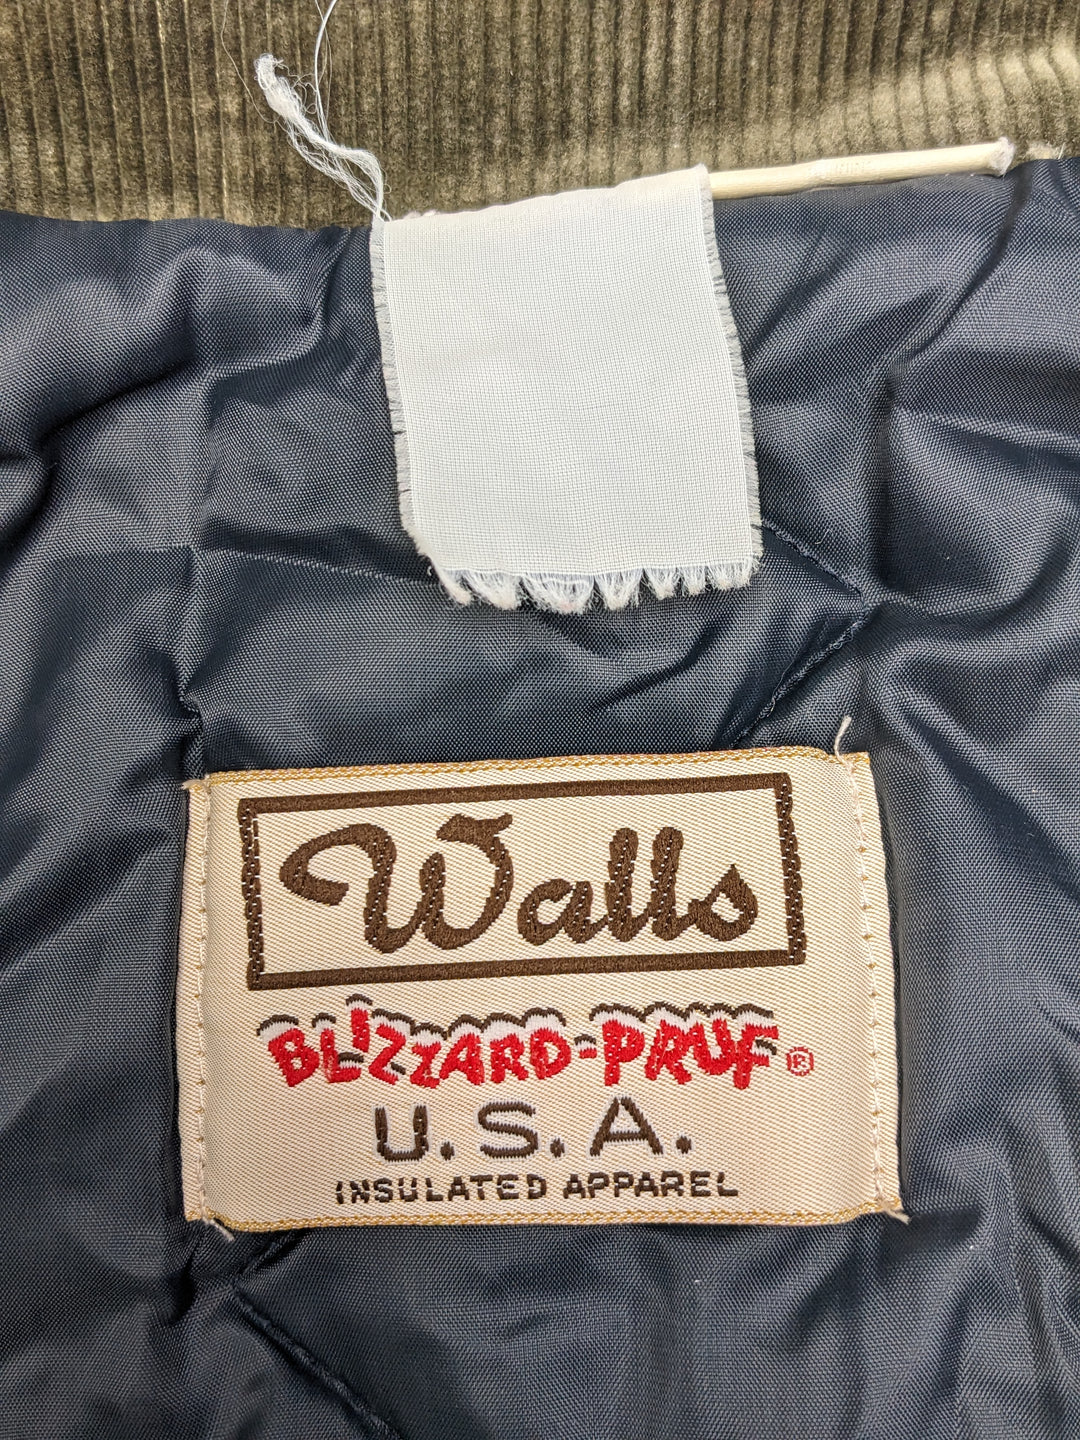 Vintage Walls Camo Blizzard Pruf Bomber 1 pc 3 lbs D0416215-05